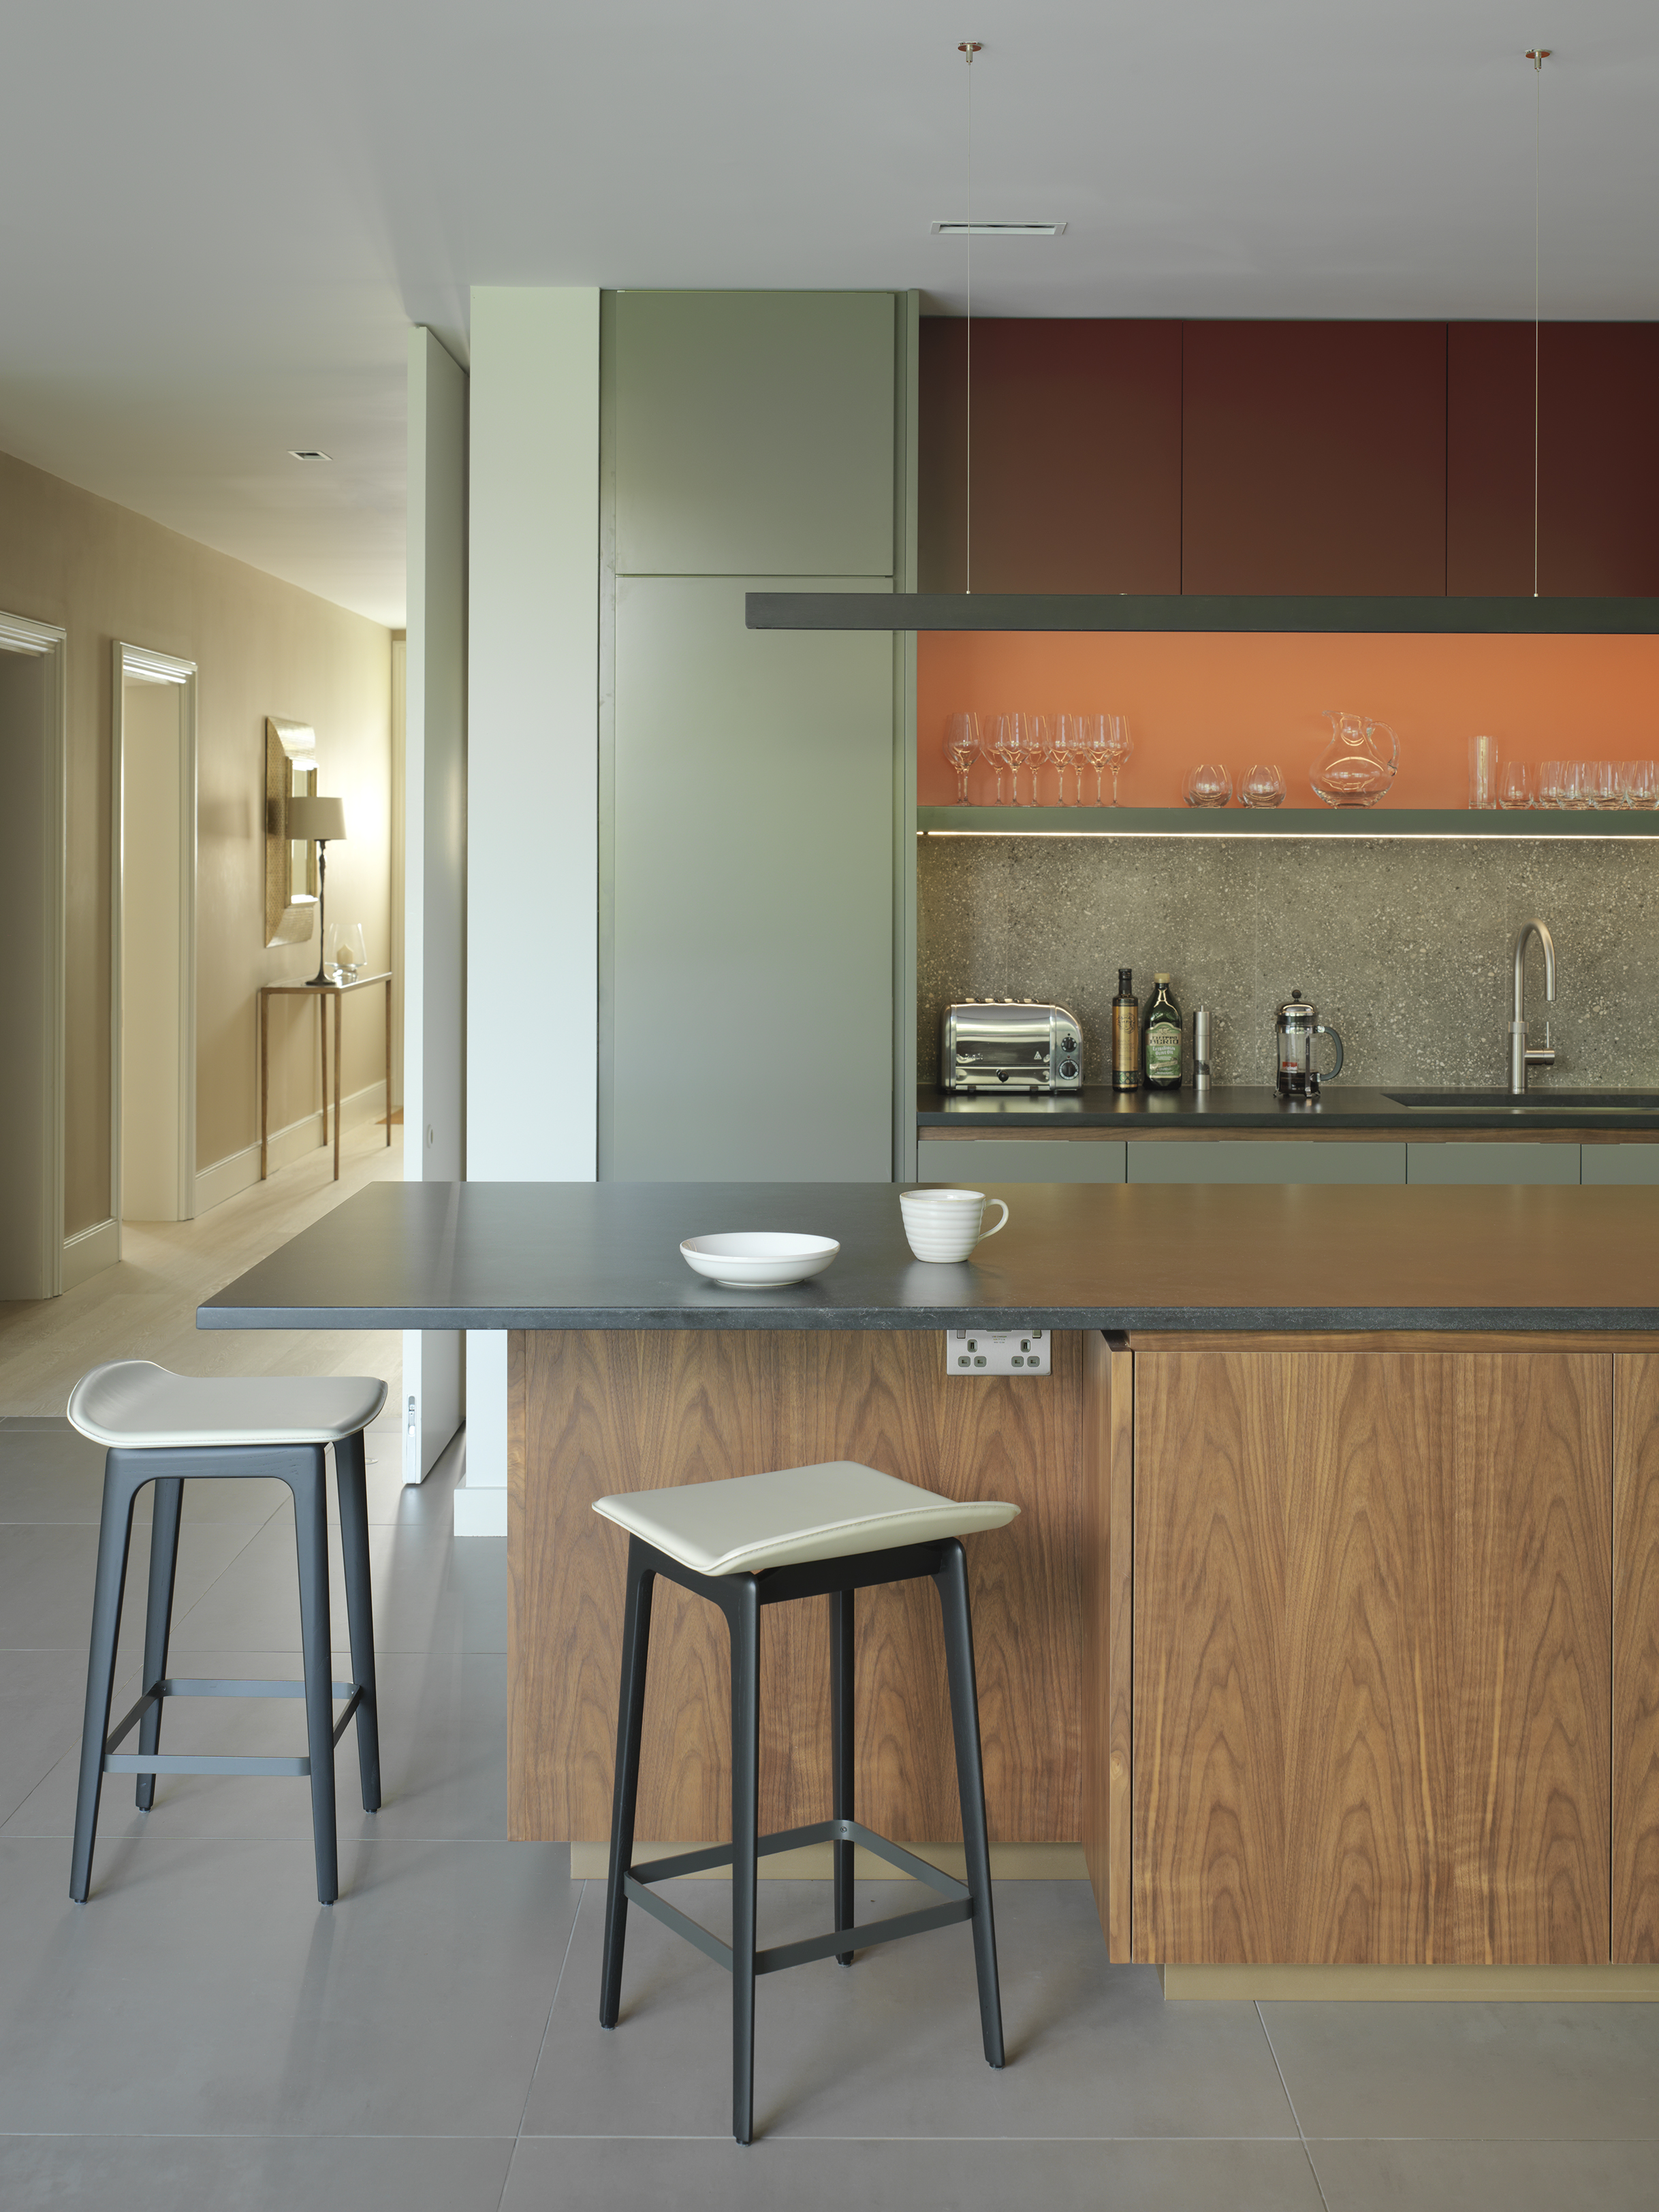 Kitchen- modern, bold colour, walnut wood and stone bespoke kitchen, Miele, bar stools, breakfast island